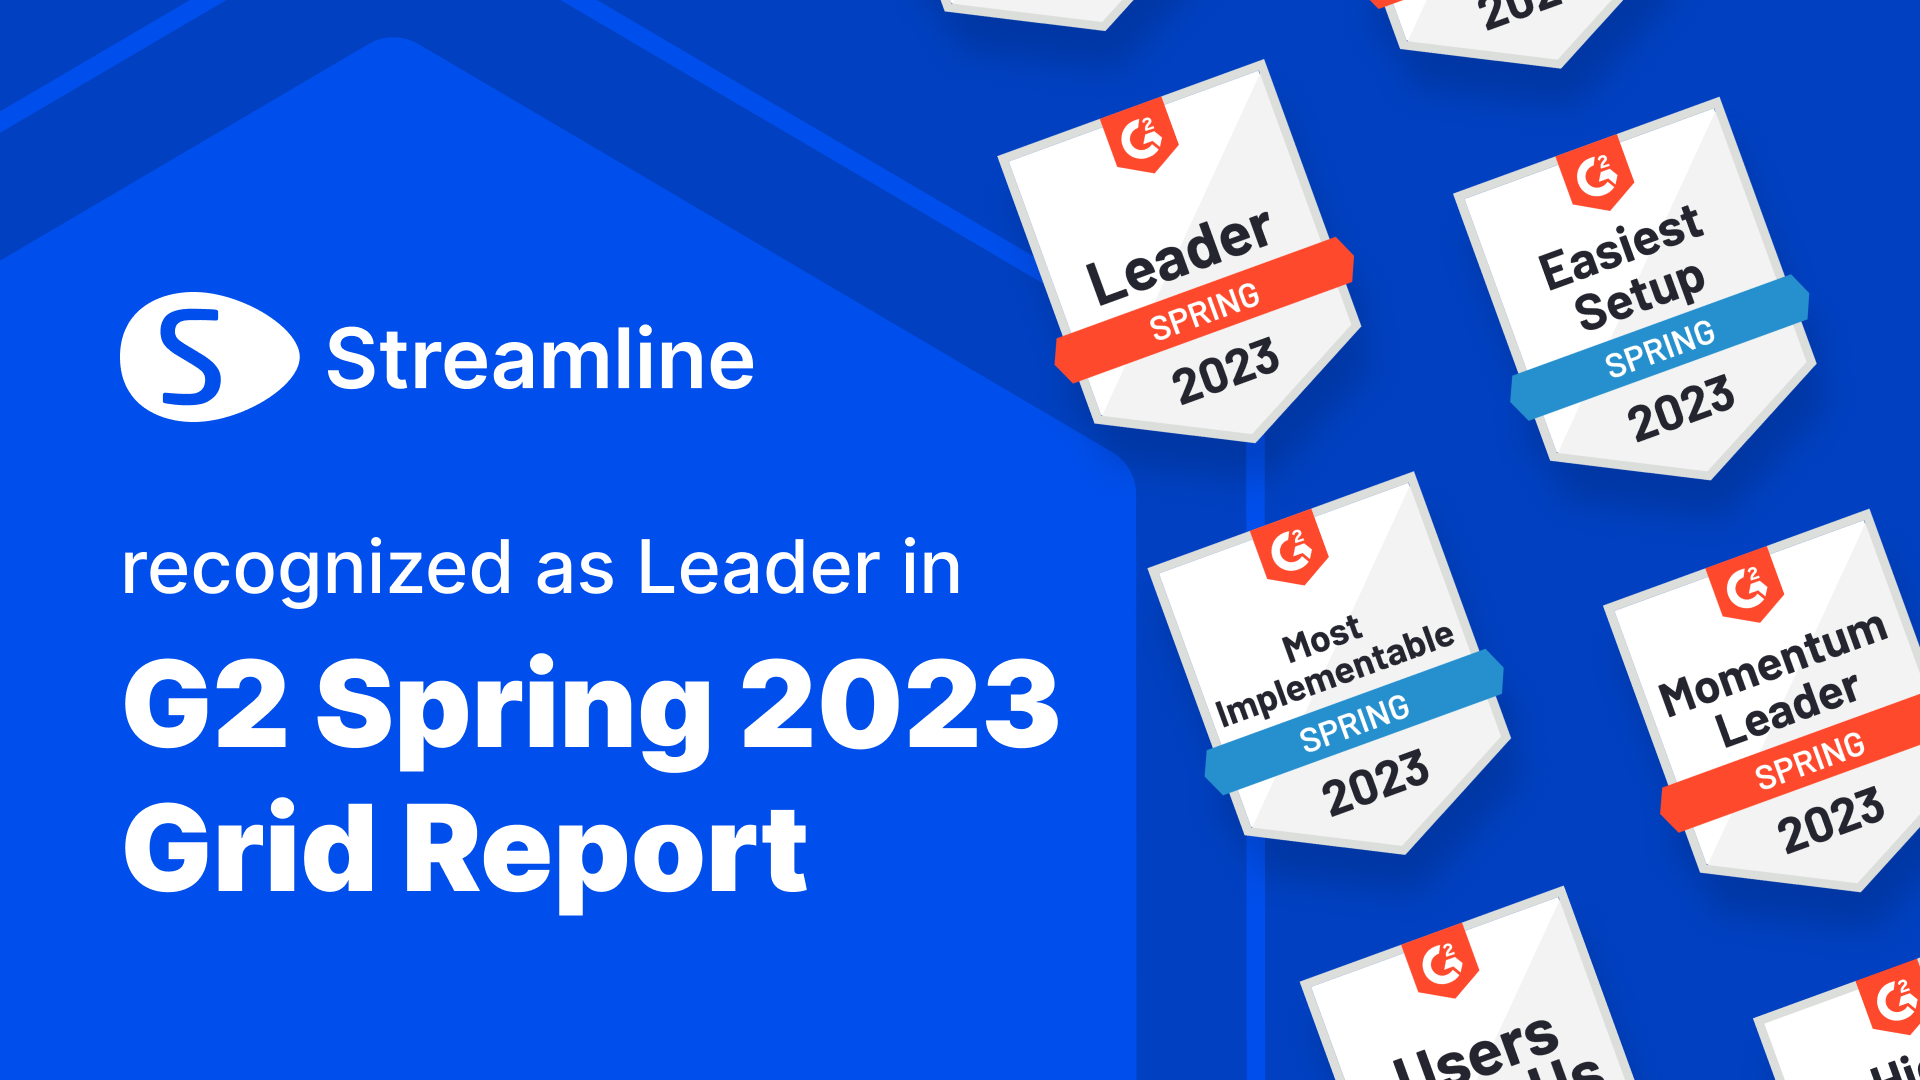 Streamline מוכר כמוביל בדוח רשת G2 אביב 2023